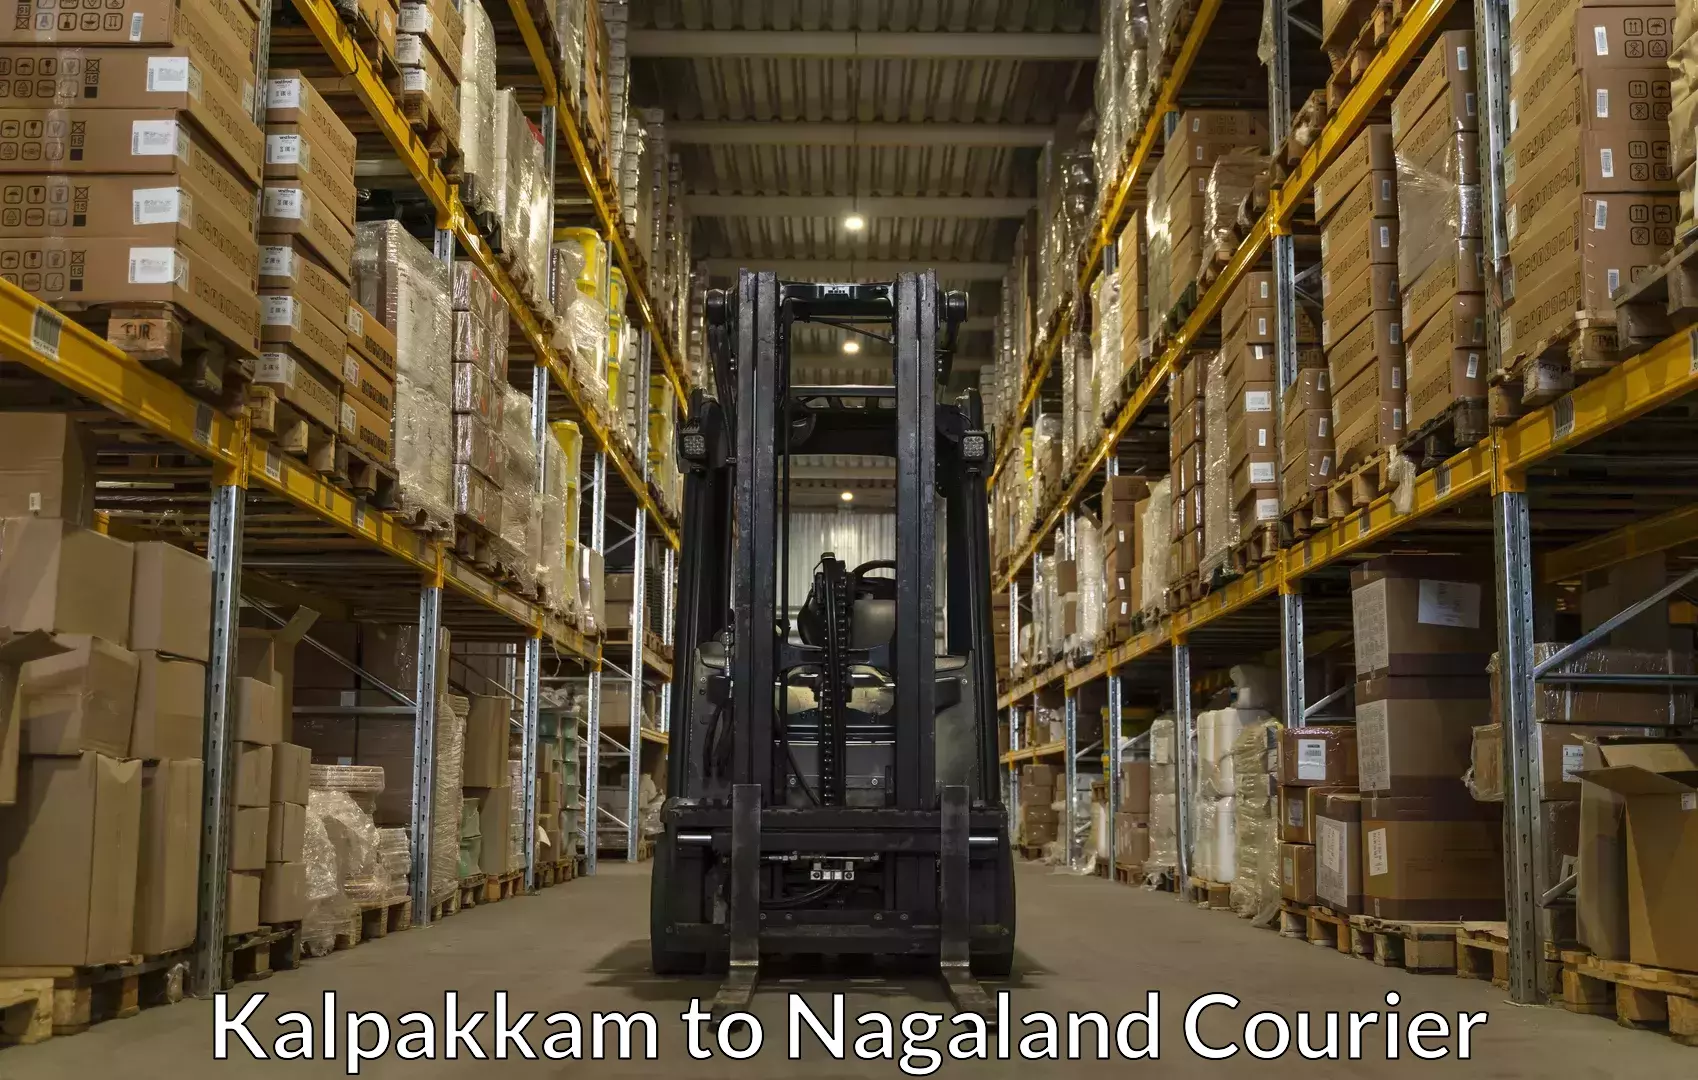 Luggage shipment specialists Kalpakkam to Dimapur